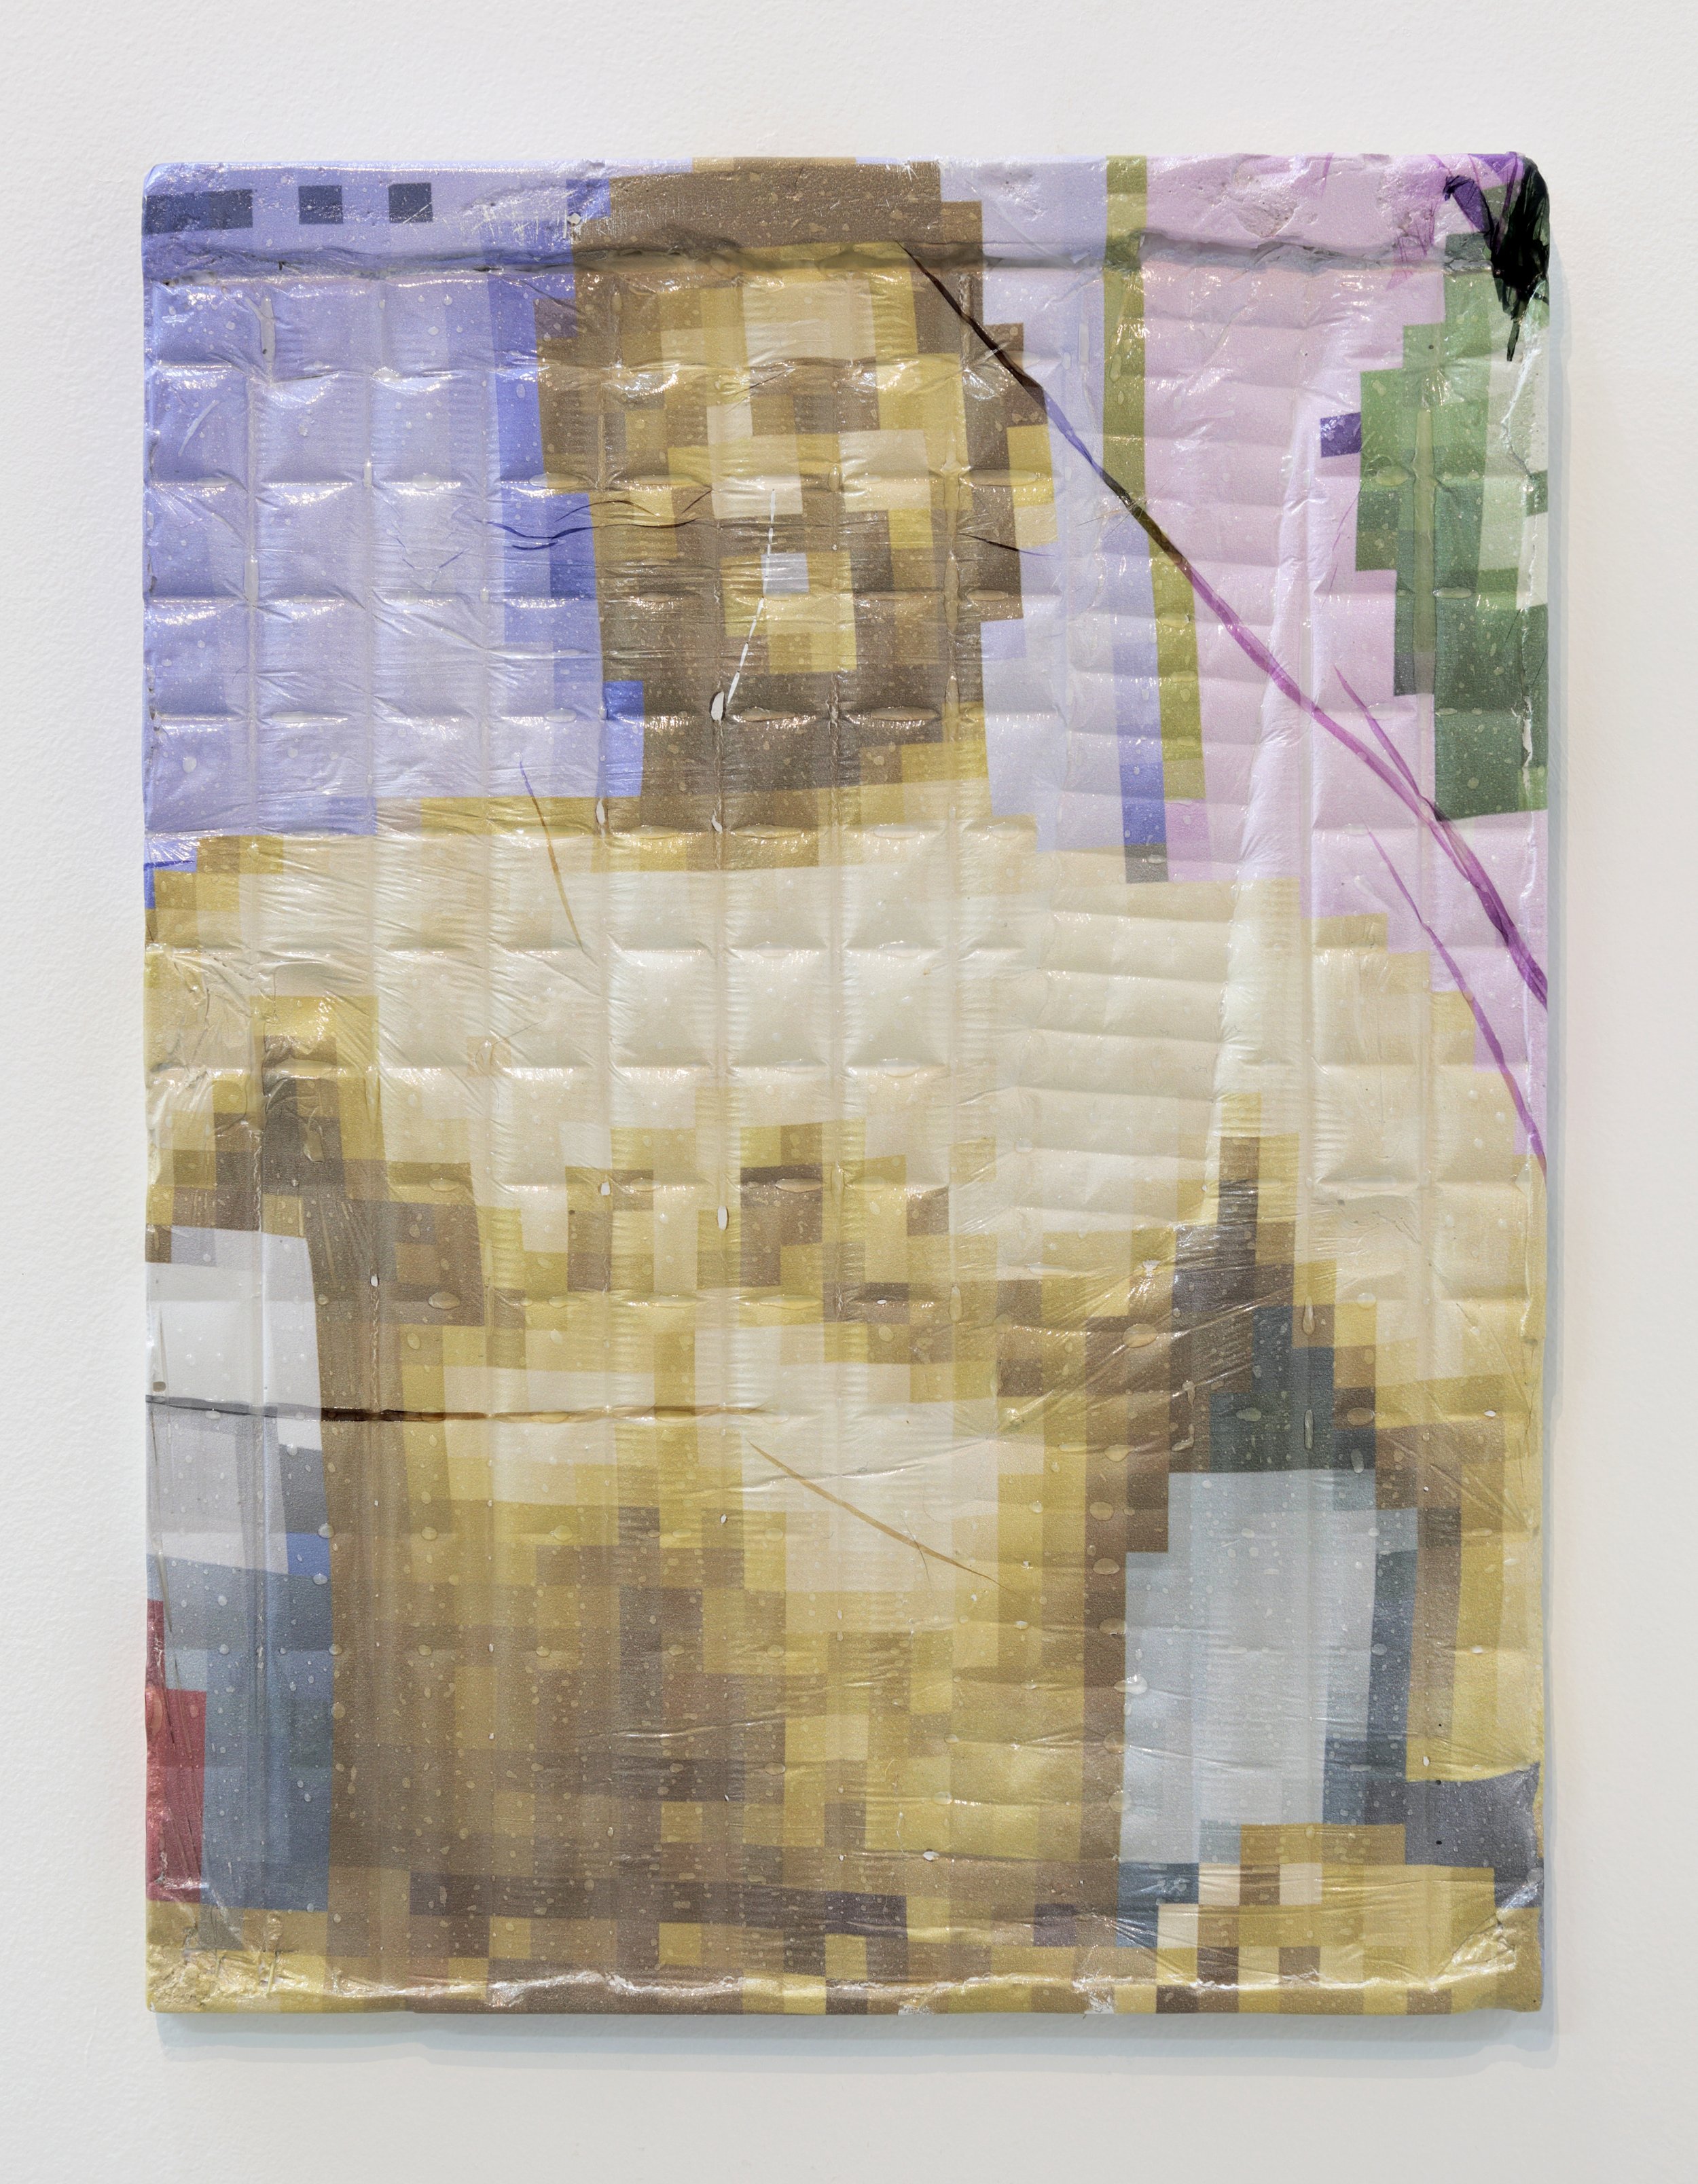   Satori   Plaster, mesh, water transfer print  40cm x 30cm   